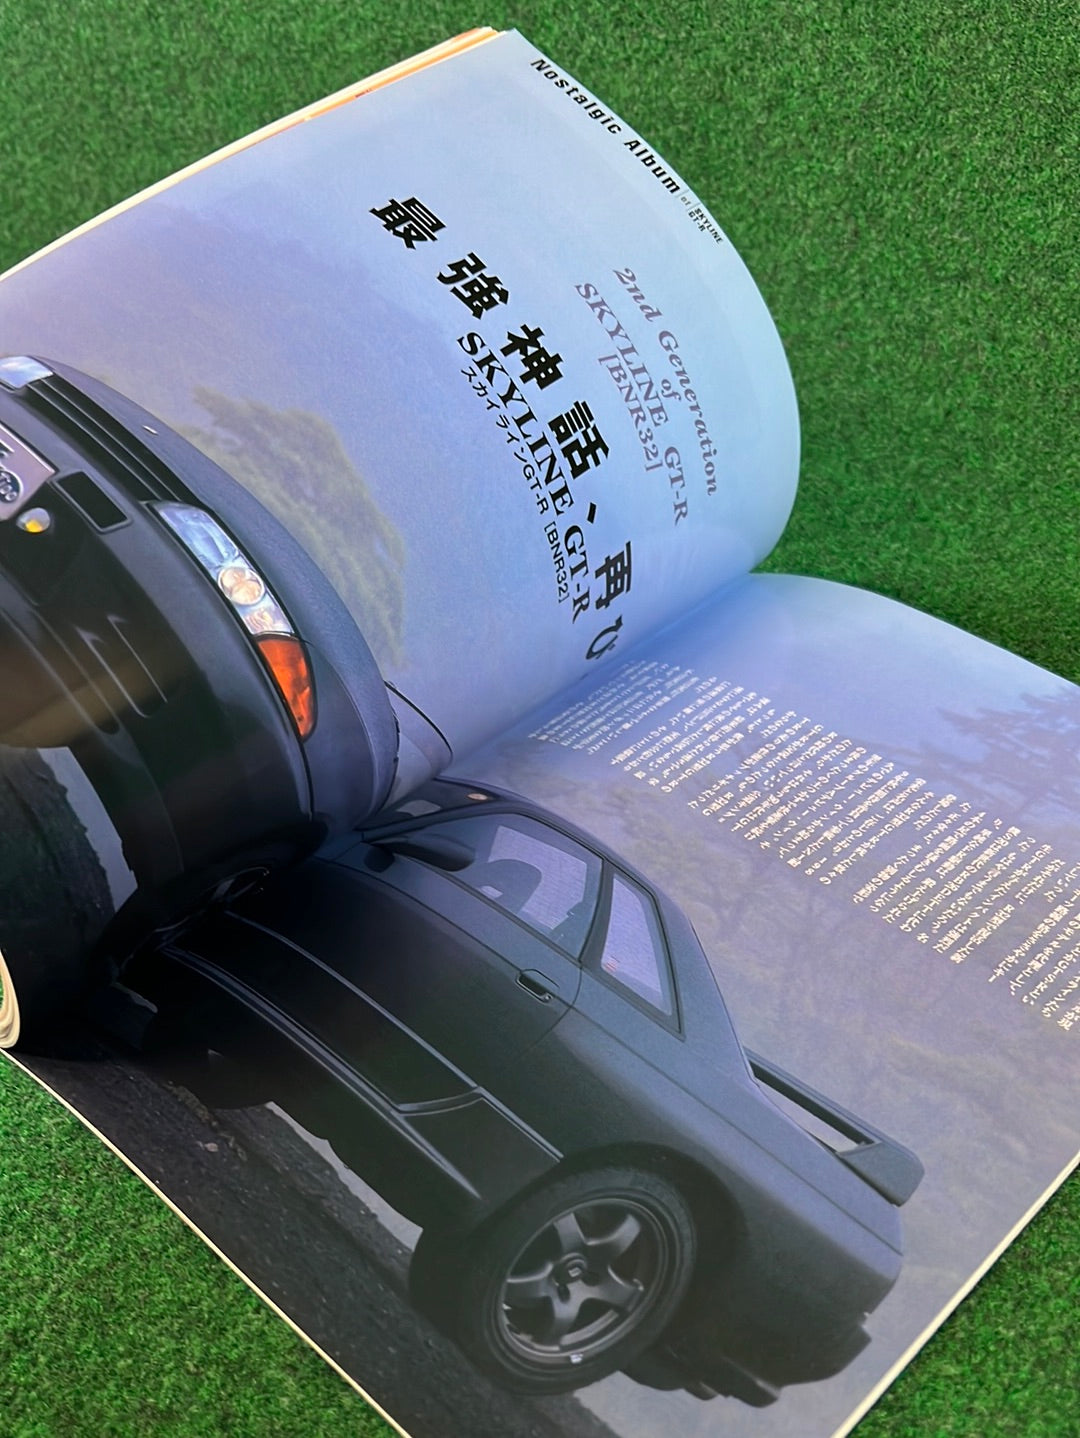 J's Tipo - Forever Skyline GT-R Magazine